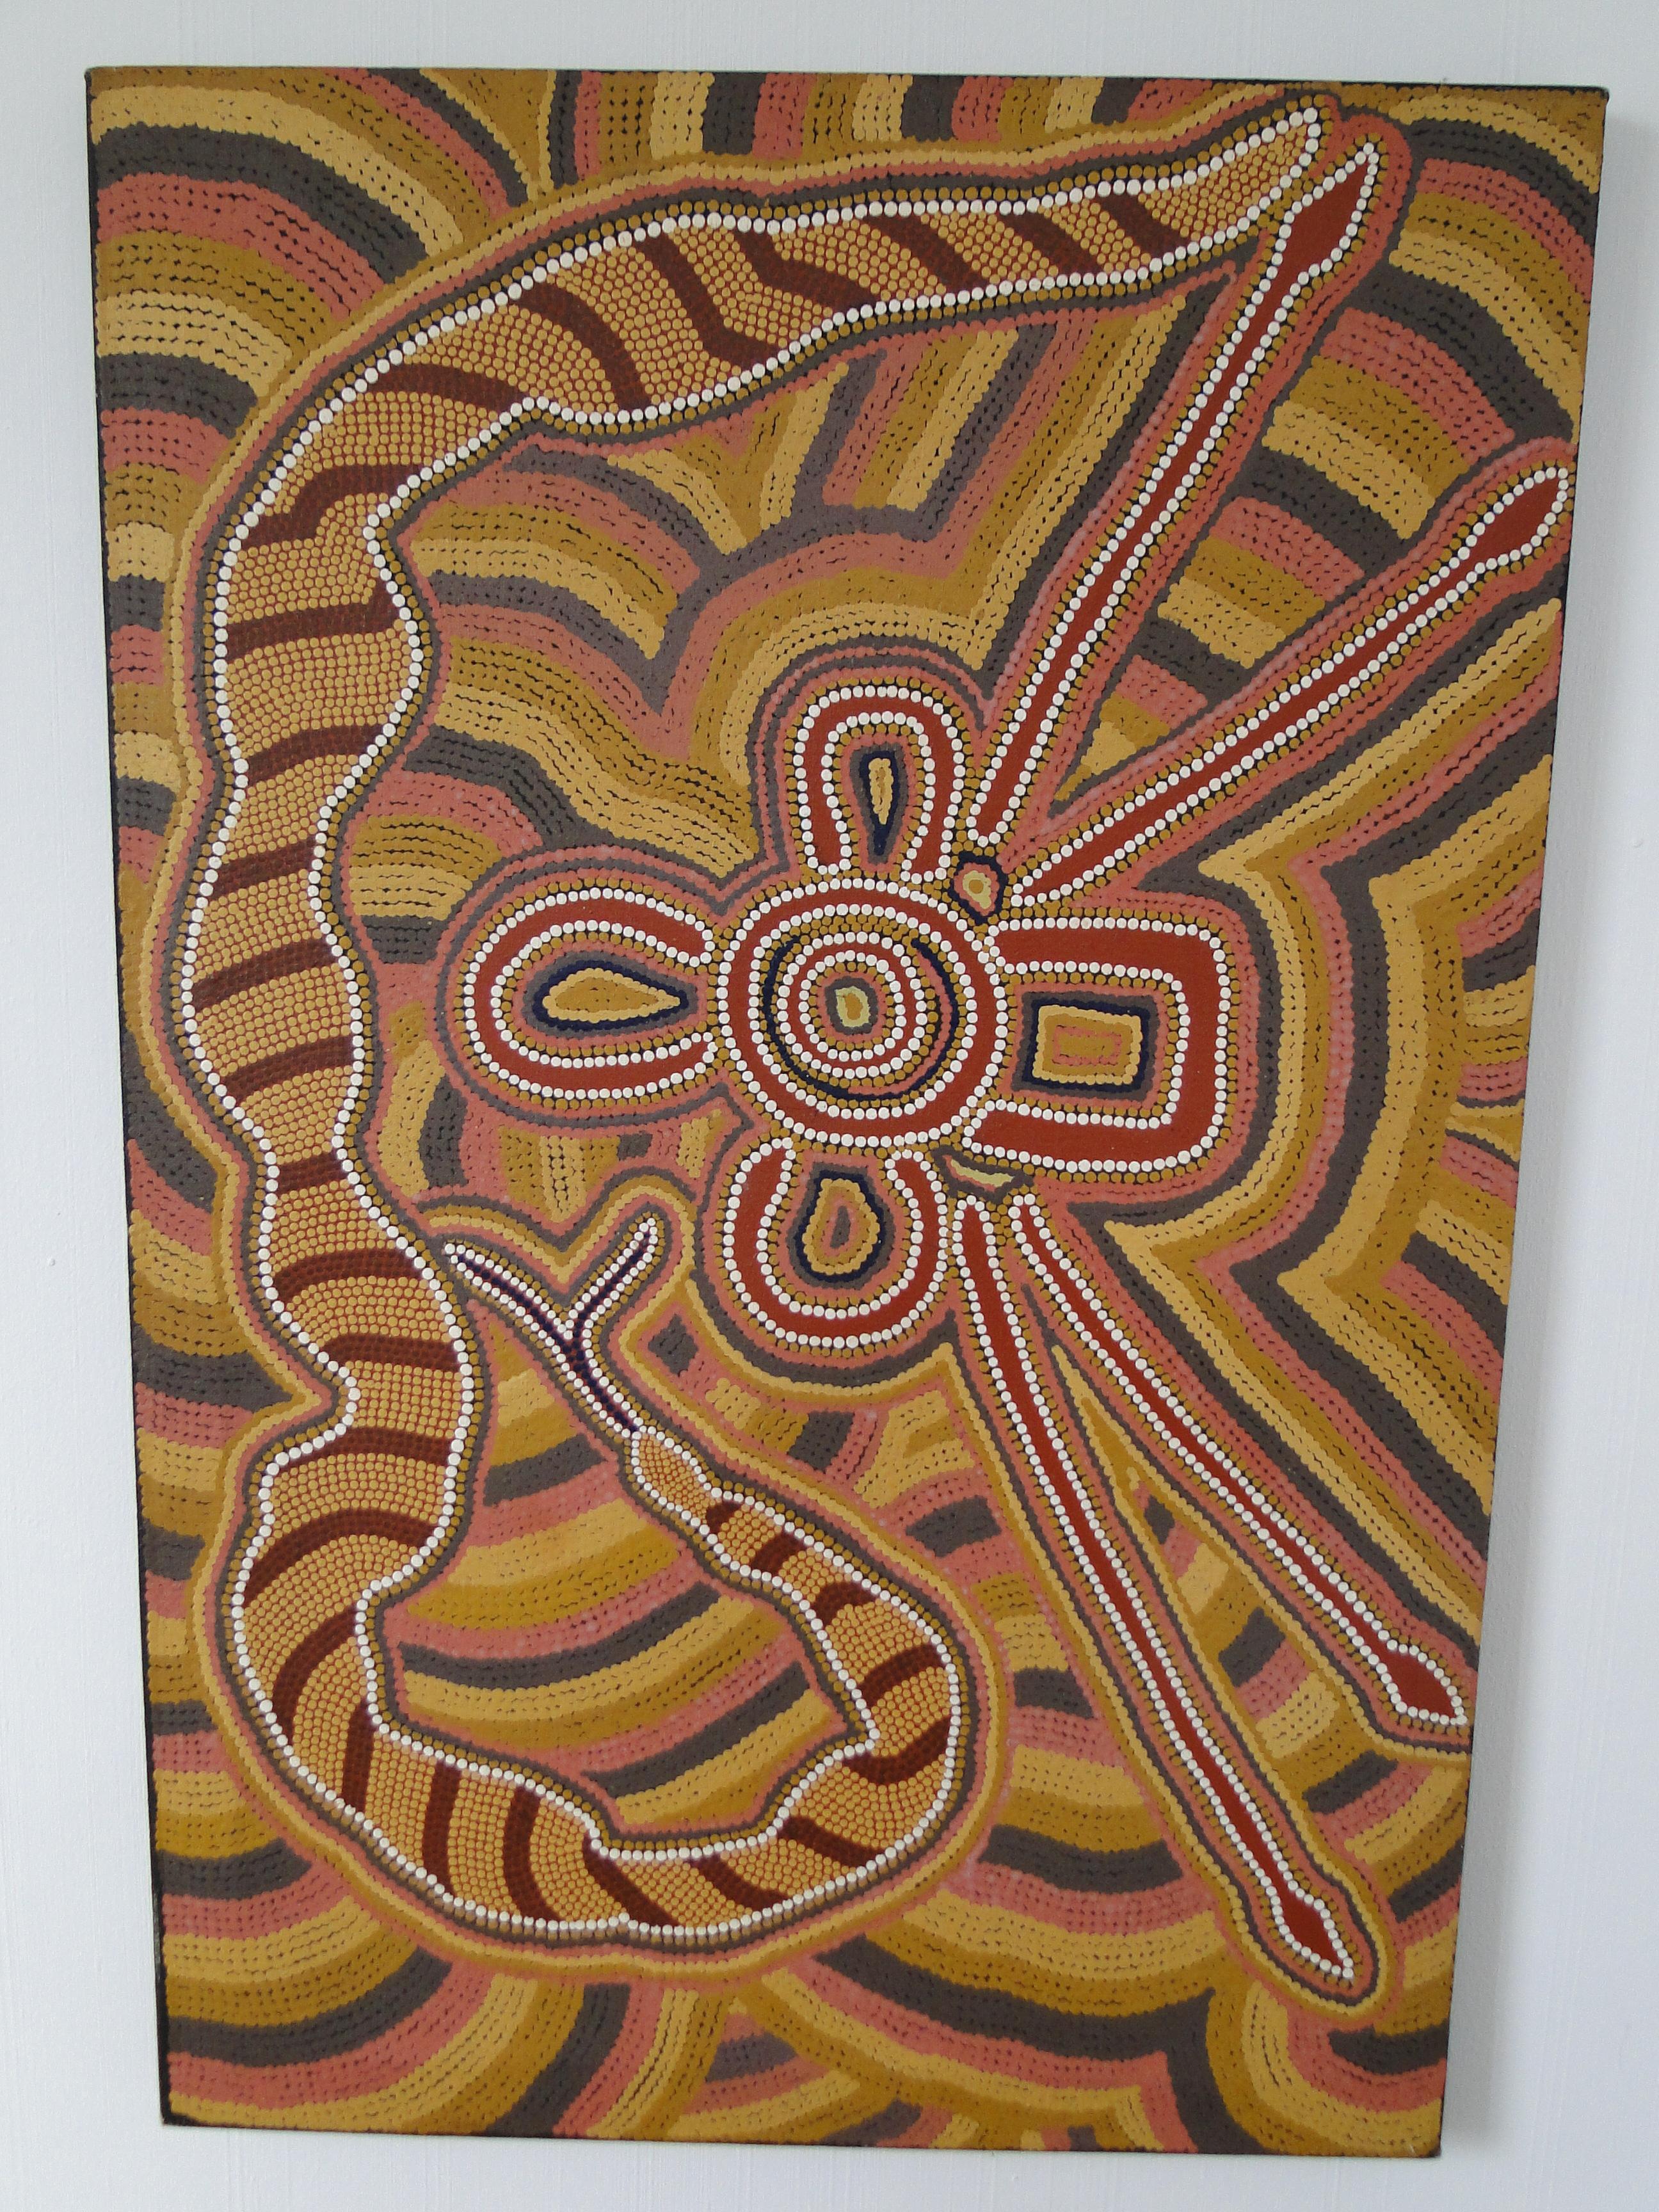 Wood Linda Syddick Napaltjarri Painting Australian Contemporary Indigenous Art Paint For Sale